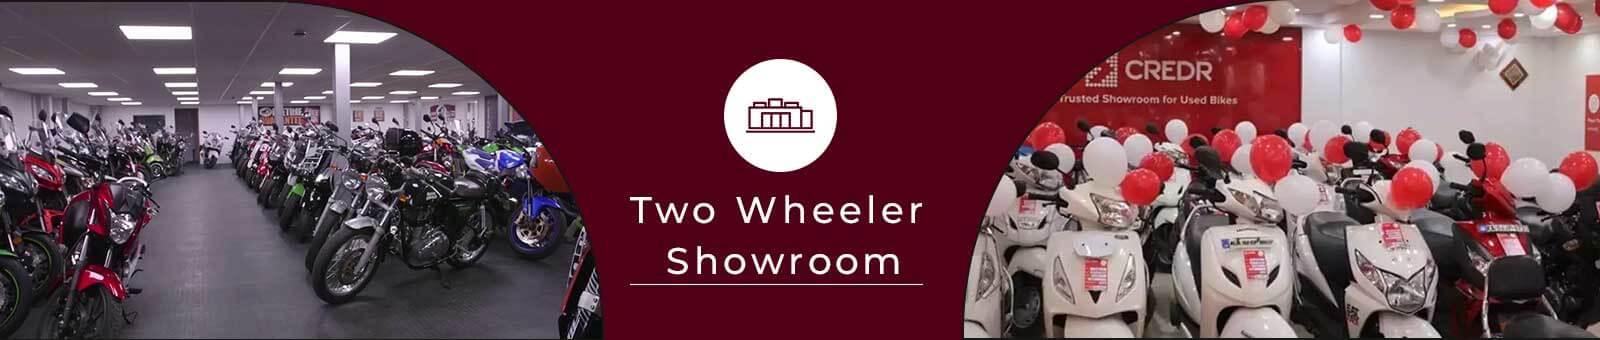 Two Wheeler Showroom